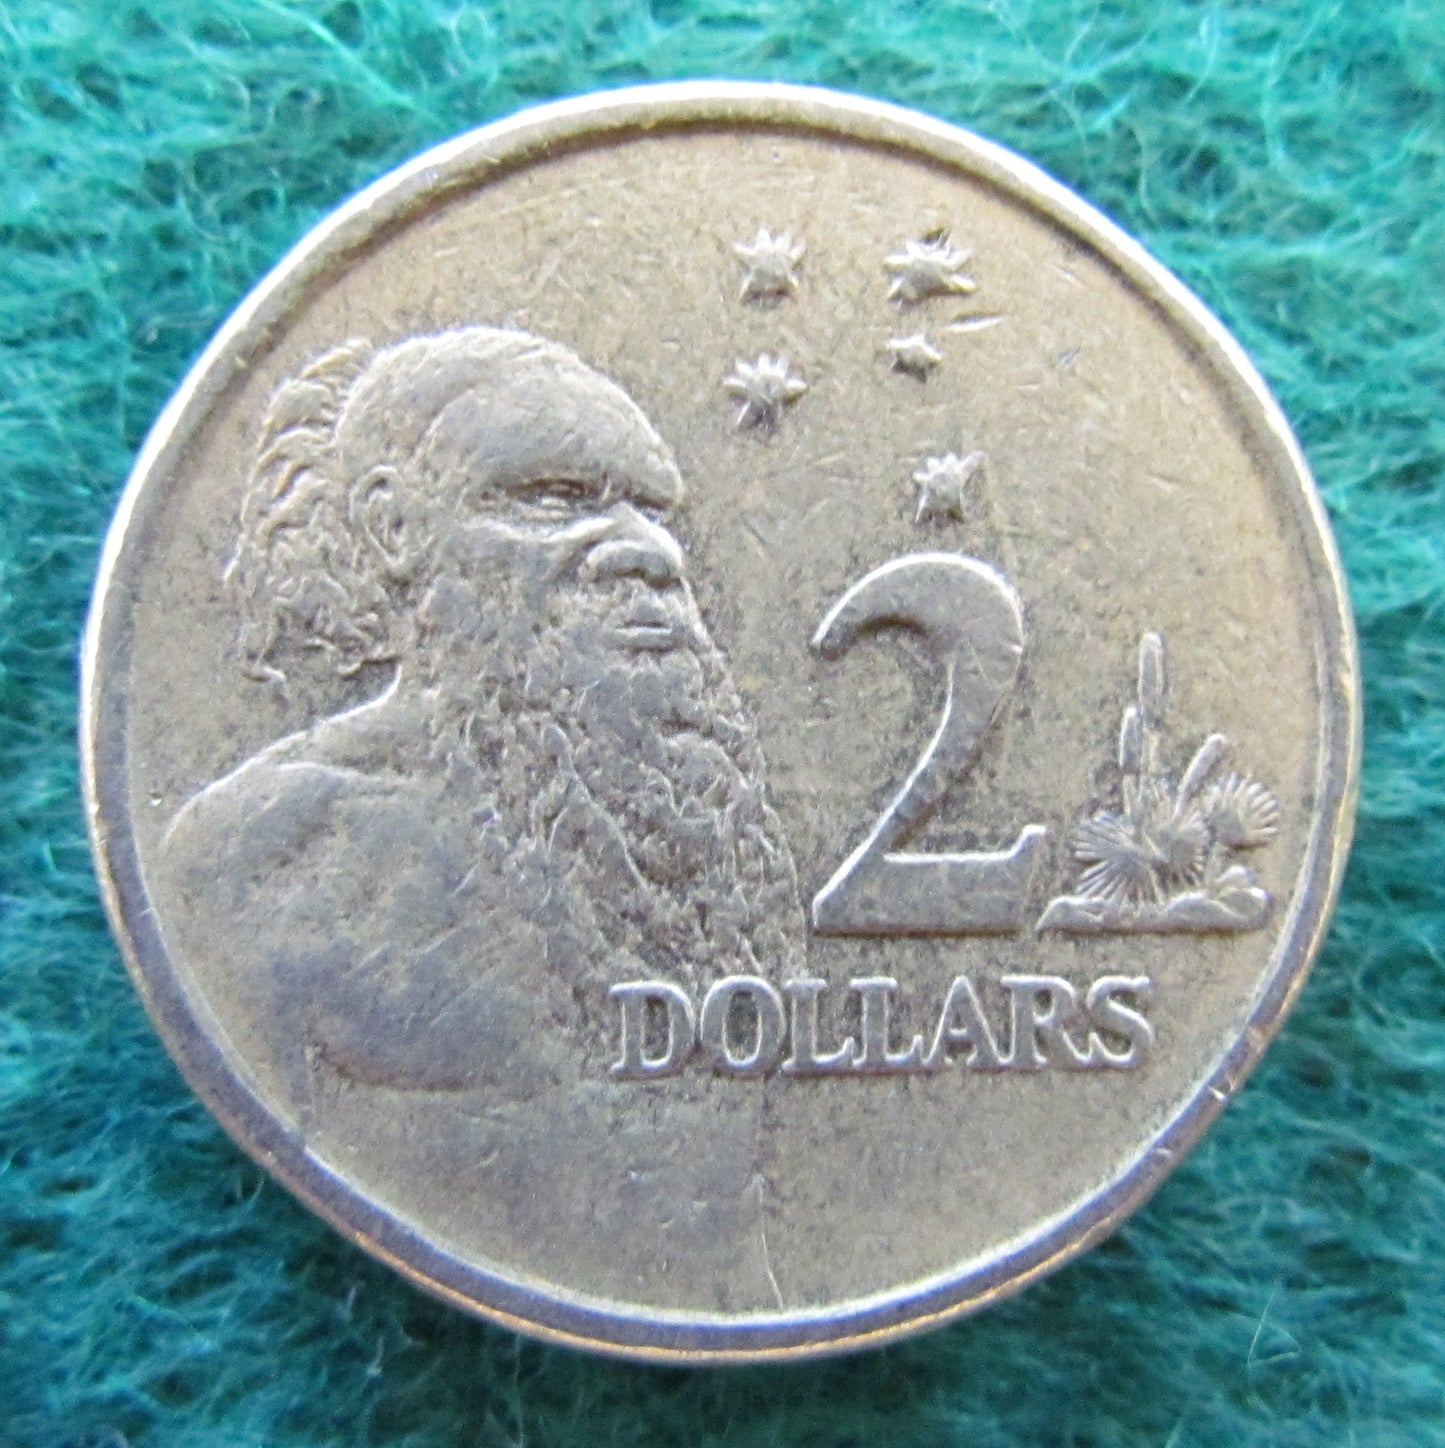 Australian 2001 2 Dollar Aboriginal Elder Queen Elizabeth Coin - Circulated